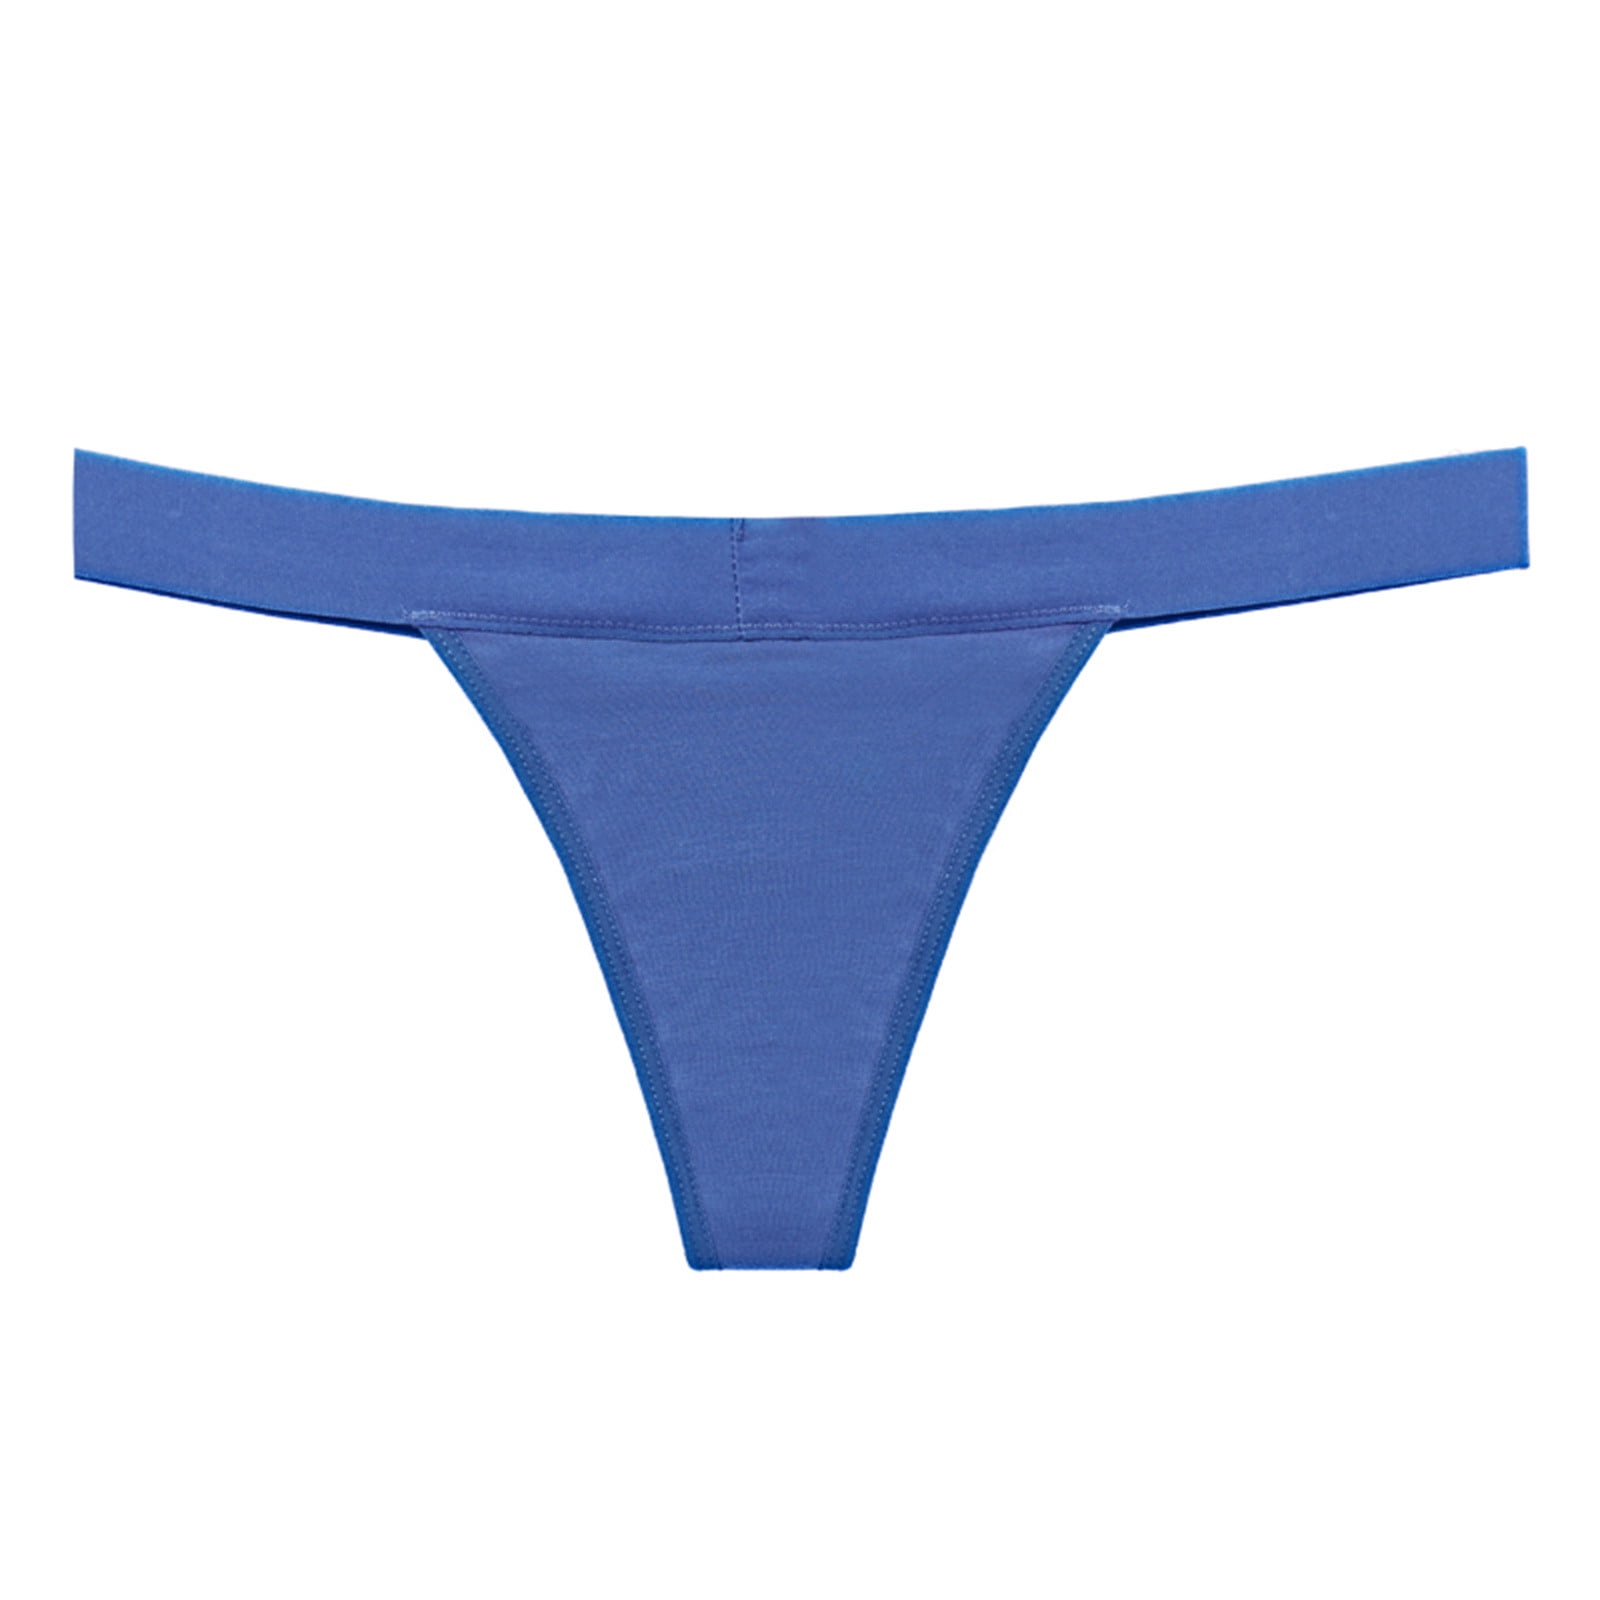 nsendm Female Underpants Adult Womens Underwear Seamless Cotton Bikini  Women Solid Color Briefs Underpants Sleepwear plus Size Underwear for(Blue,  XXL) 